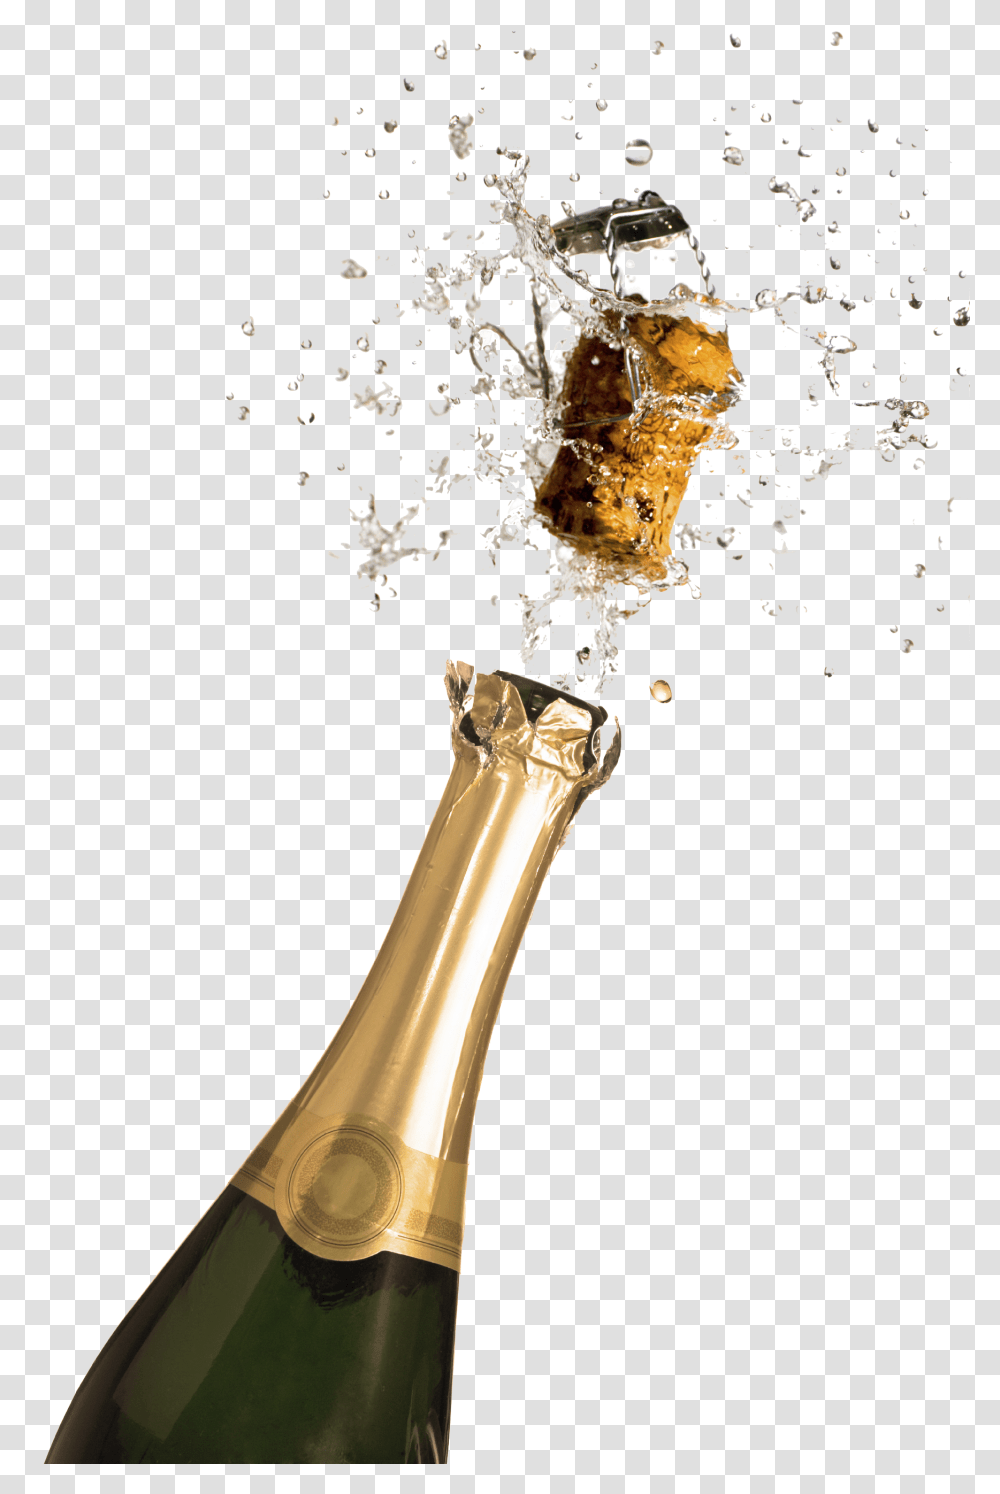 Champagne Free Download Beer Bottle Opened, Beverage, Sword, Glass, Alcohol Transparent Png